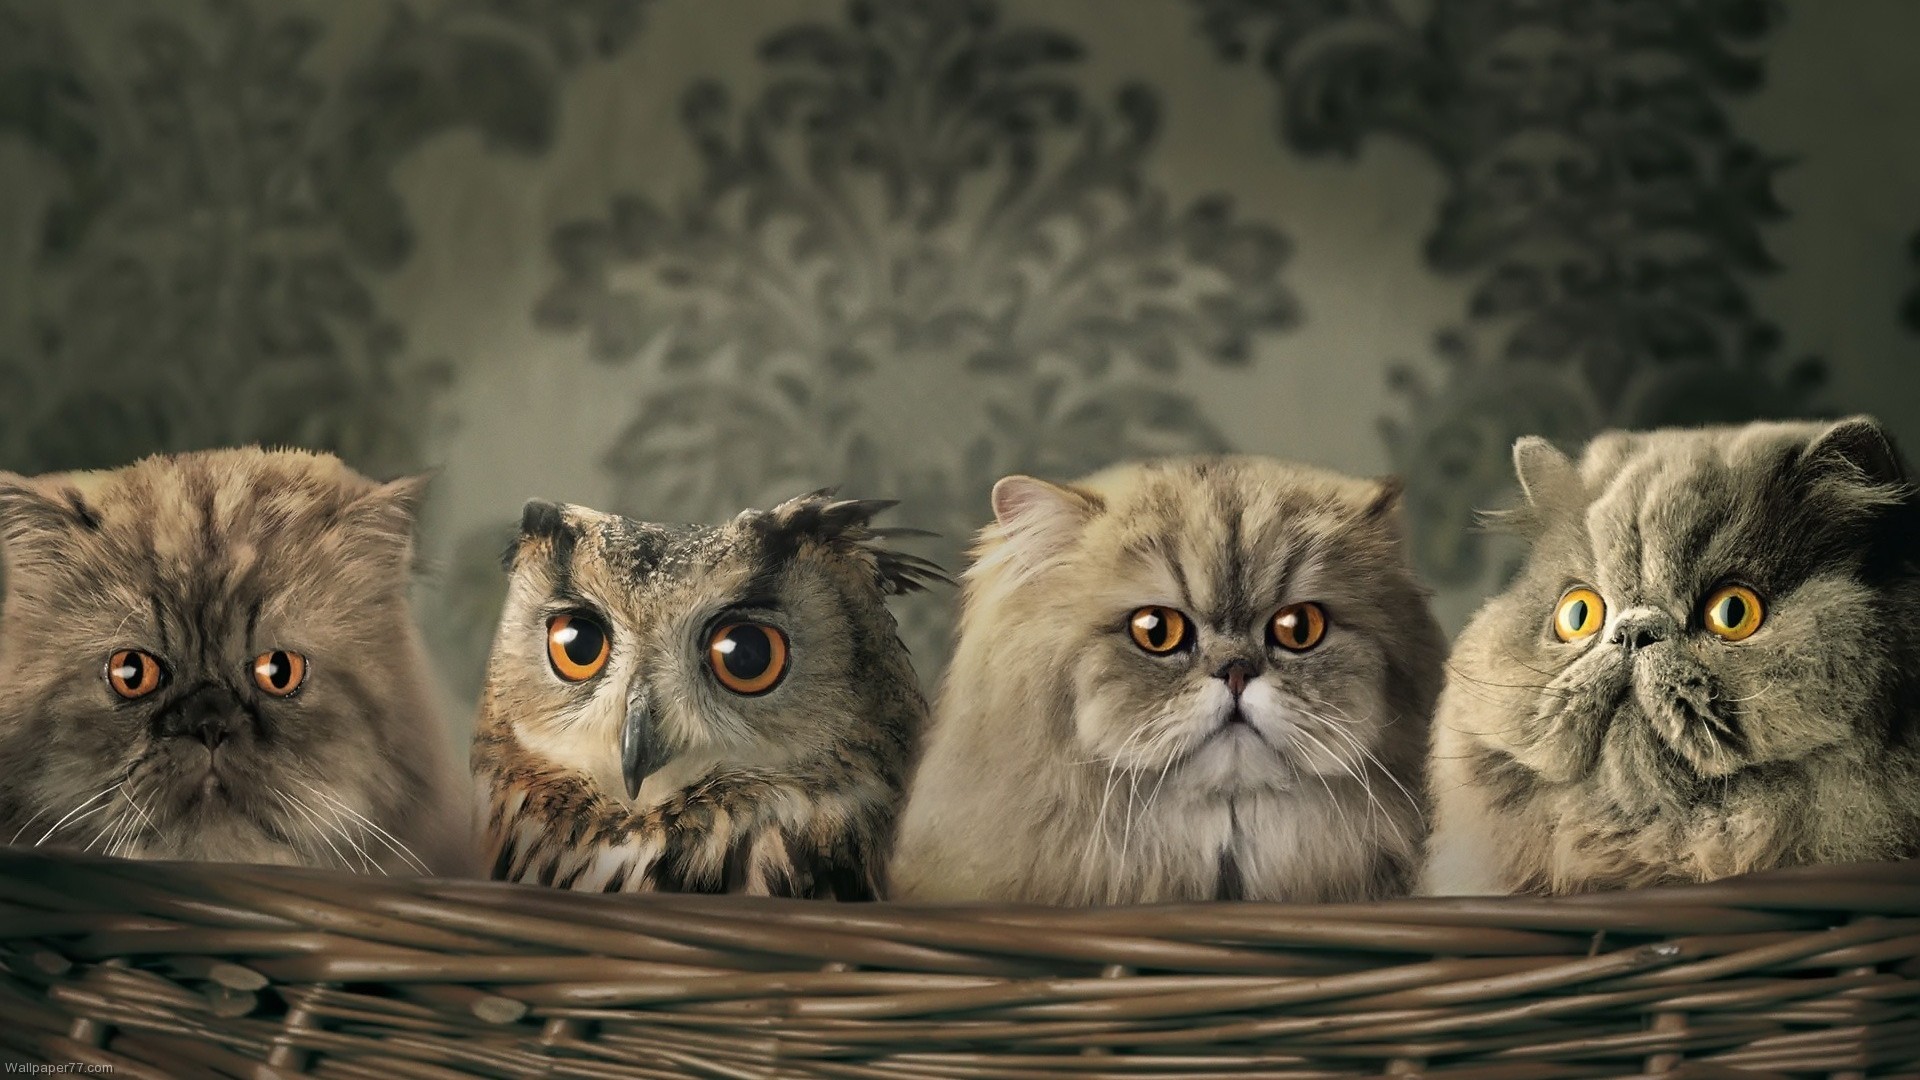 1920x1080 Cute Baby Owls Wallpap... ...